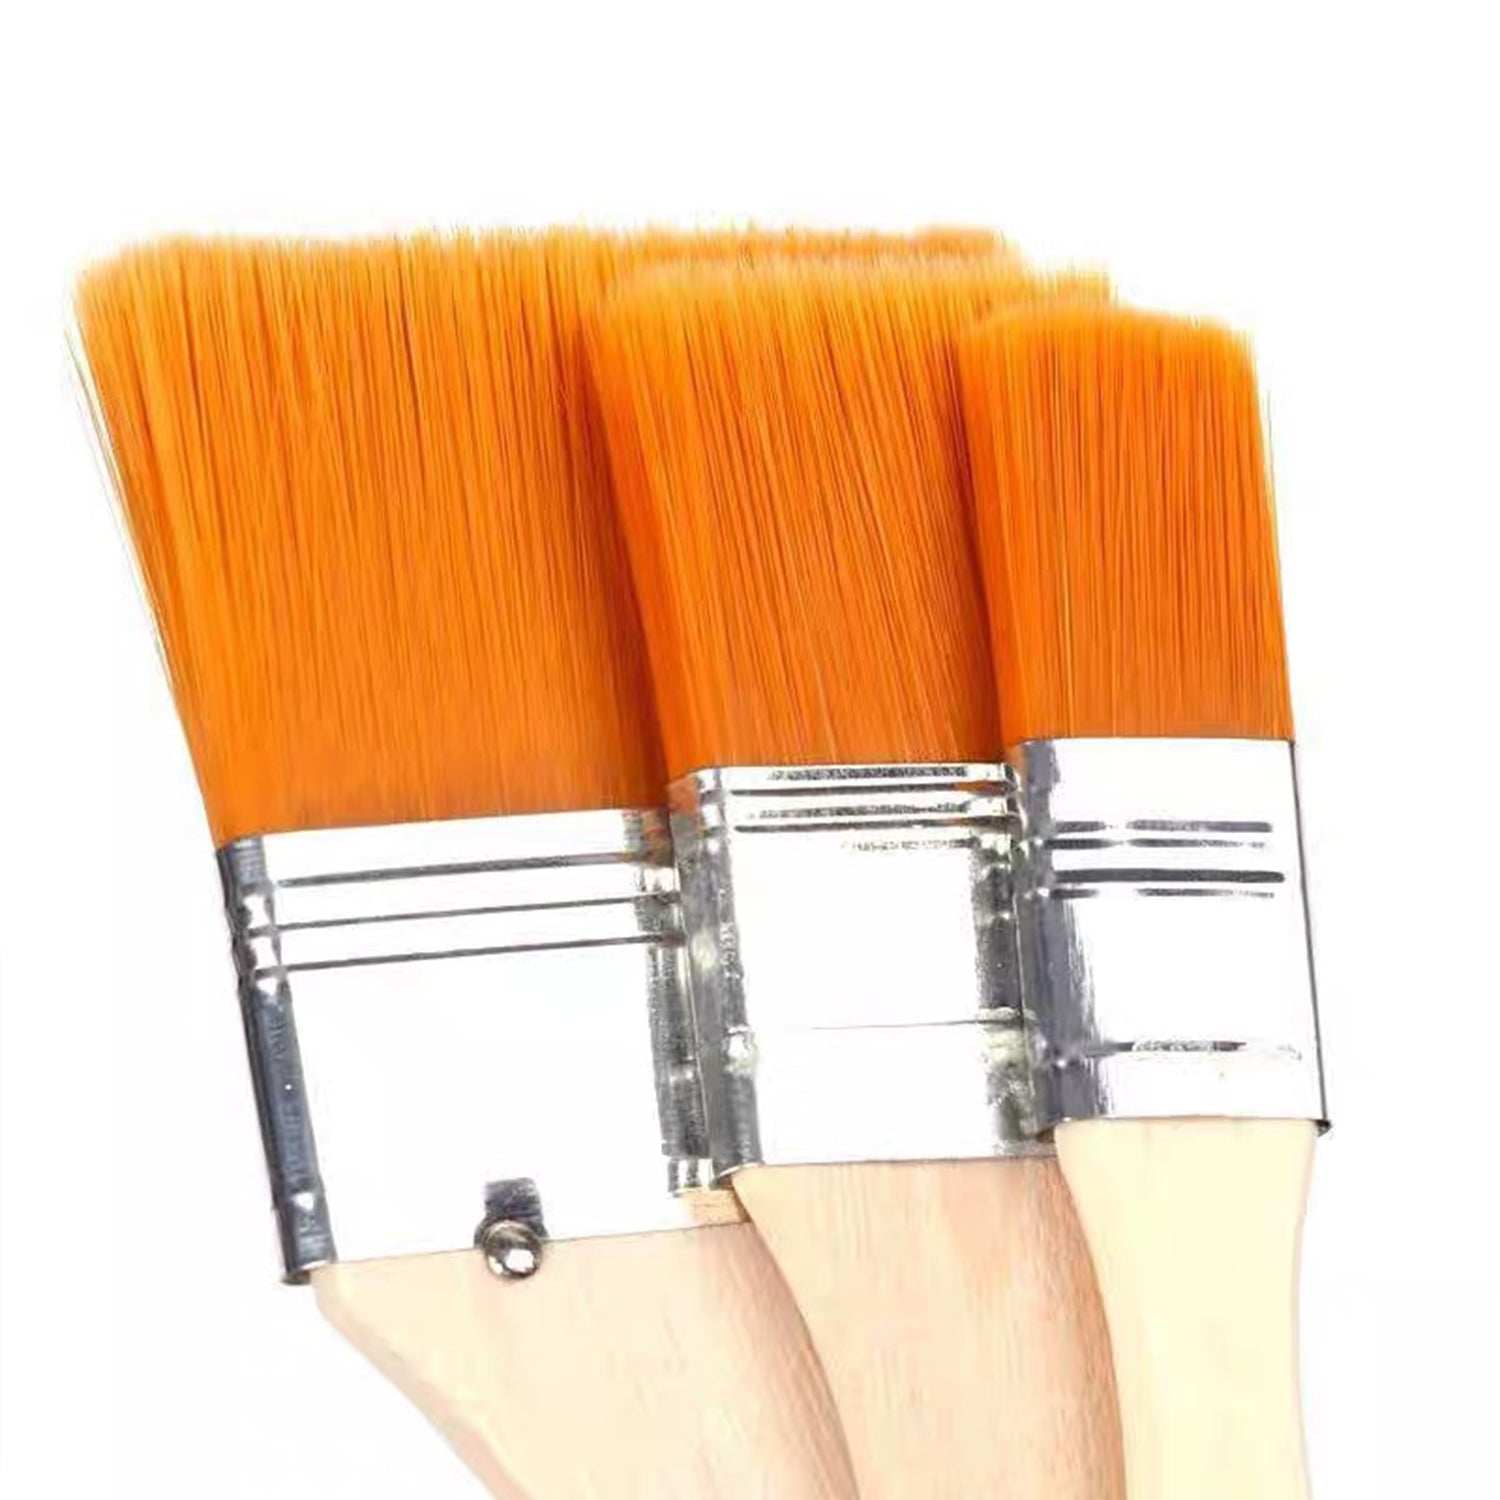 4667 Artistic Flat Painting Brush - Set of 5 